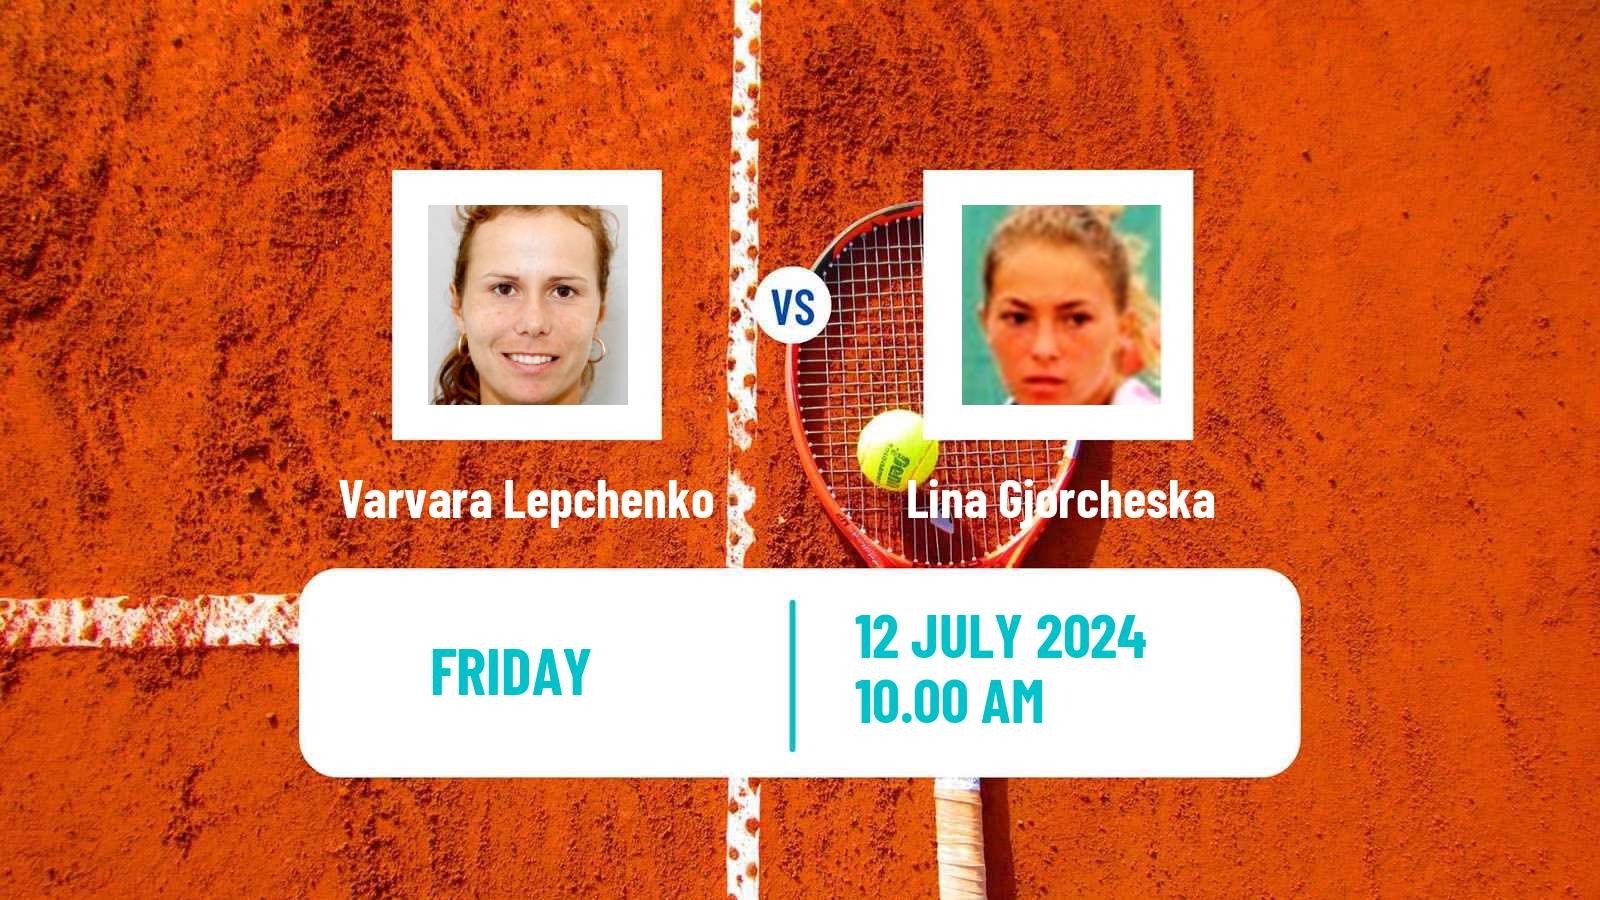 Tennis ITF W75 H Rome Women Varvara Lepchenko - Lina Gjorcheska